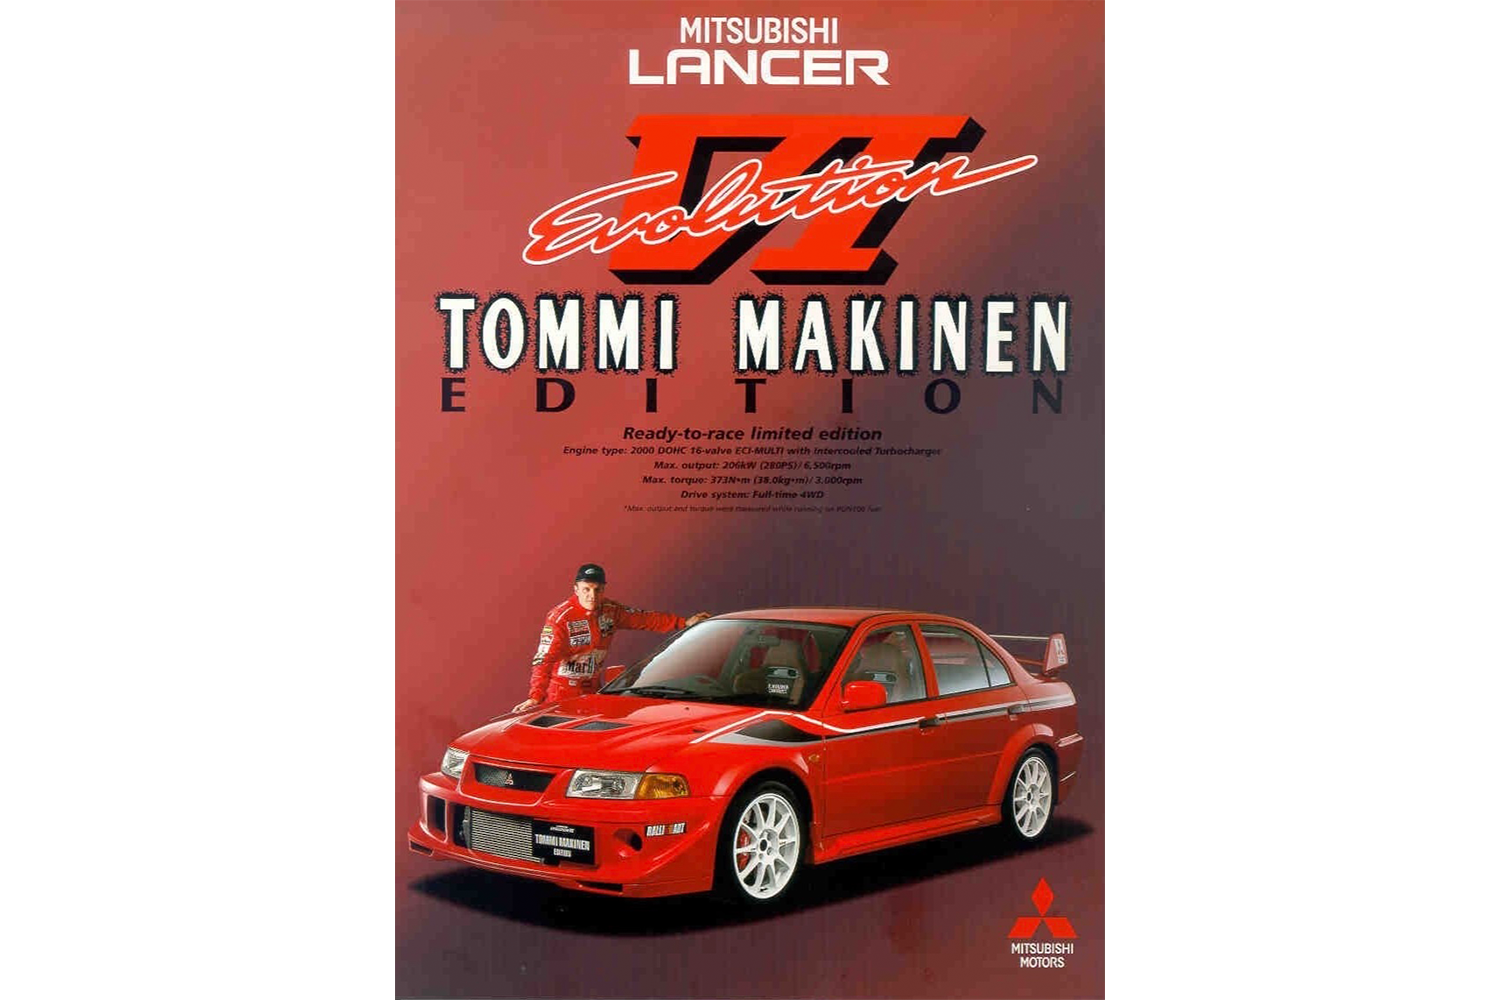 A magazine ad for the Mitsubishi Lancer Evolution VI Tommi Makinen edition